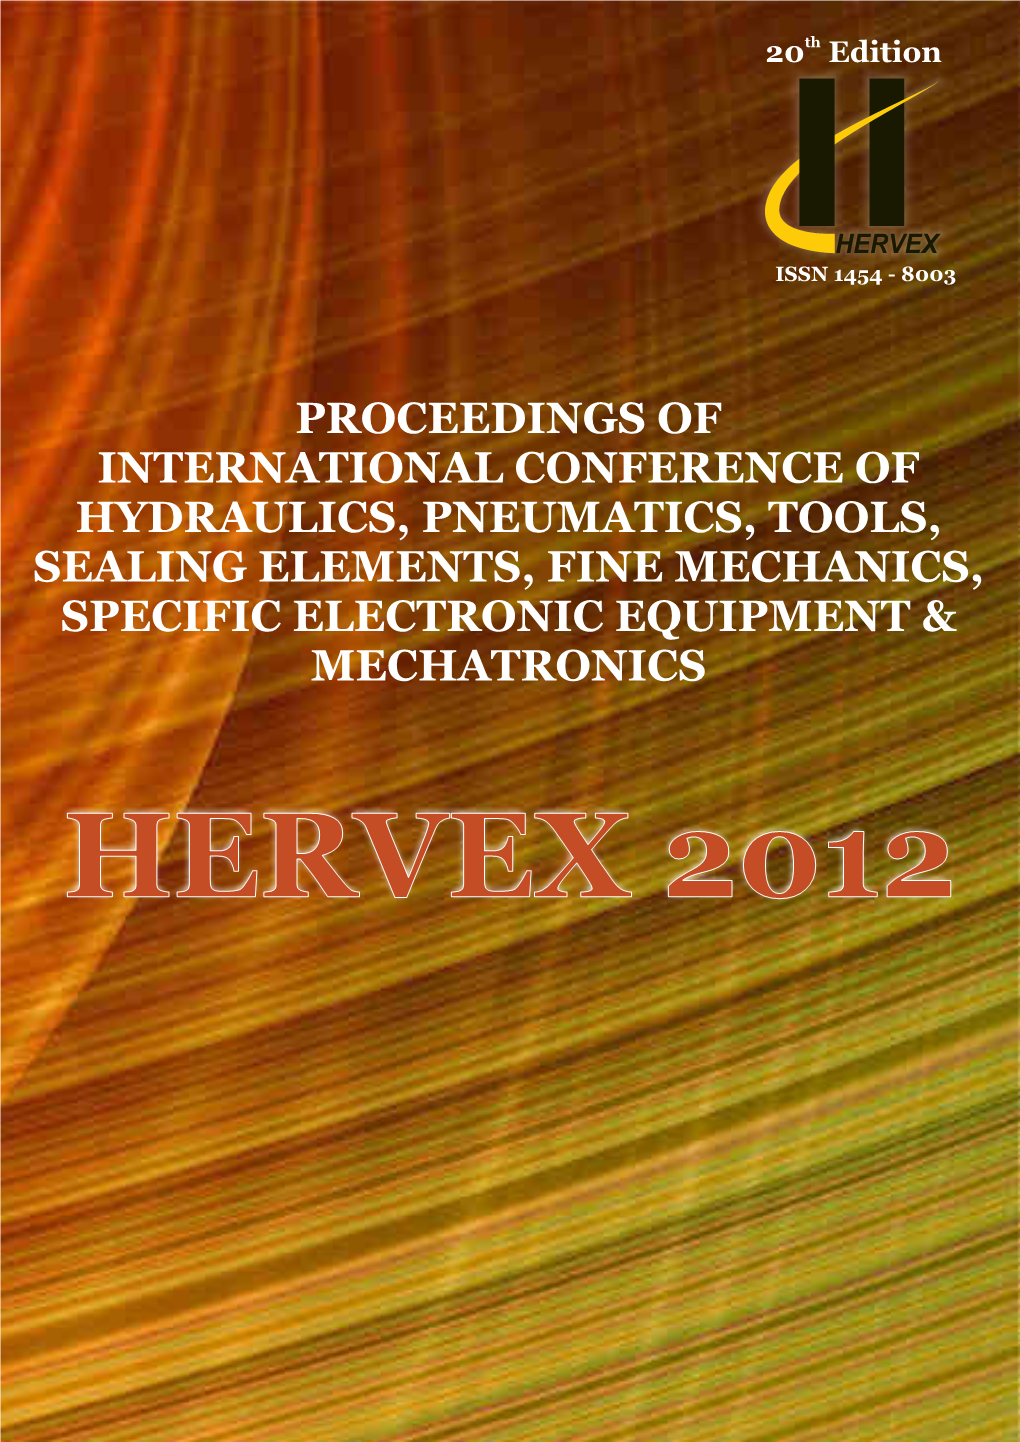 Proceedings of International Conference of Hydraulics, Pneumatics, Tools, Sealing Elements, Fine Mechanics, Specific Electronic Equipment & Mechatronics Hervex 2012